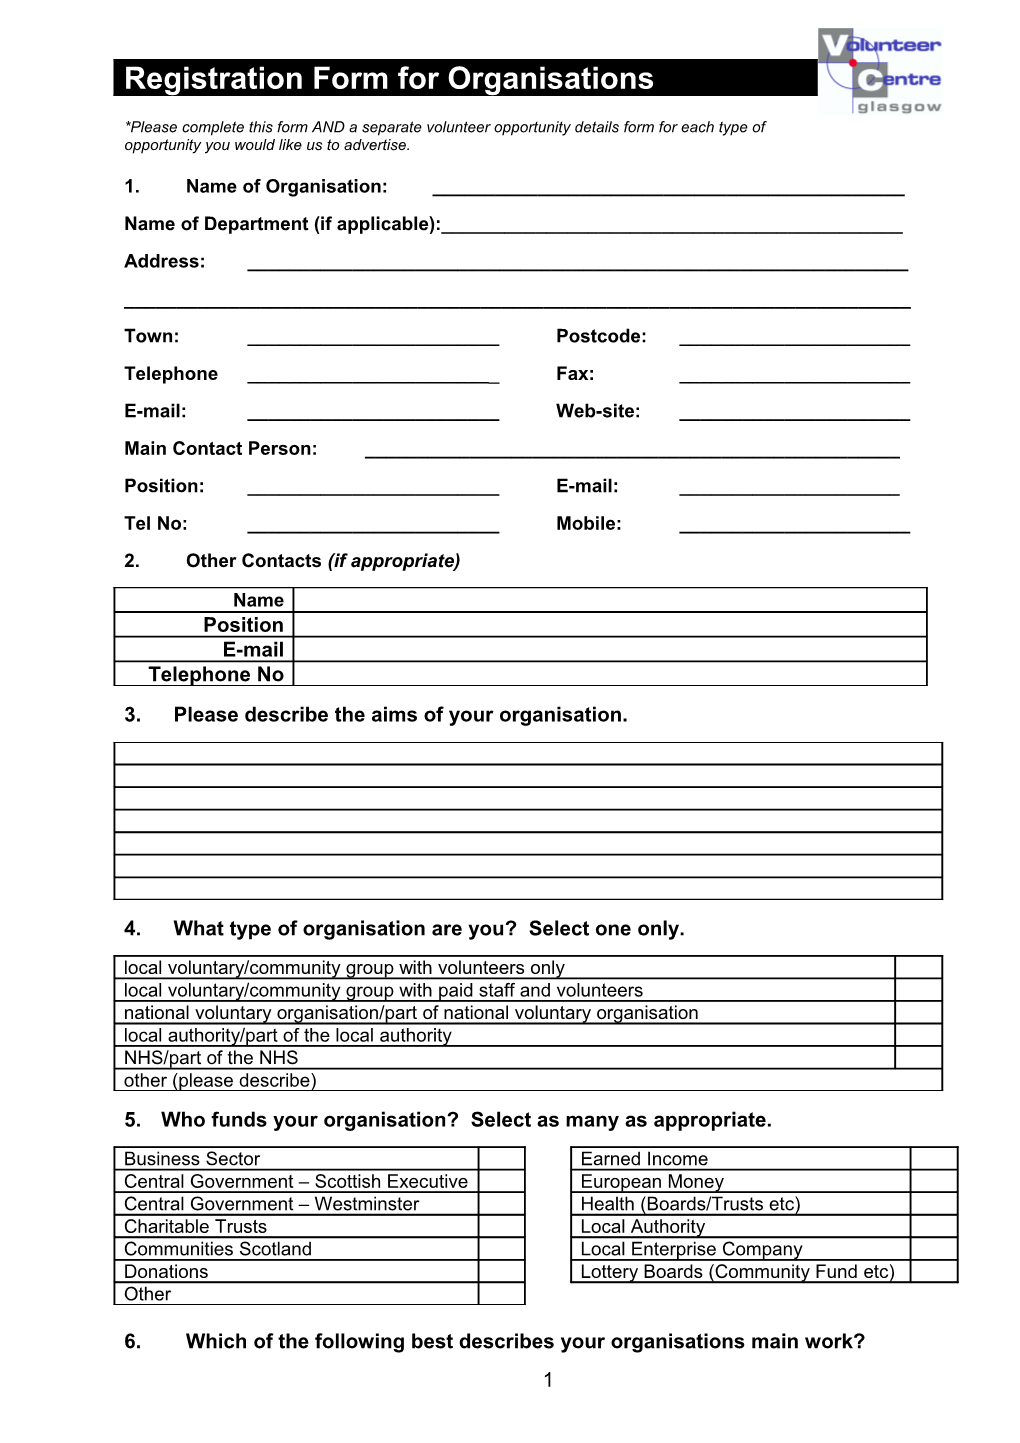 Registration Form for Organisations